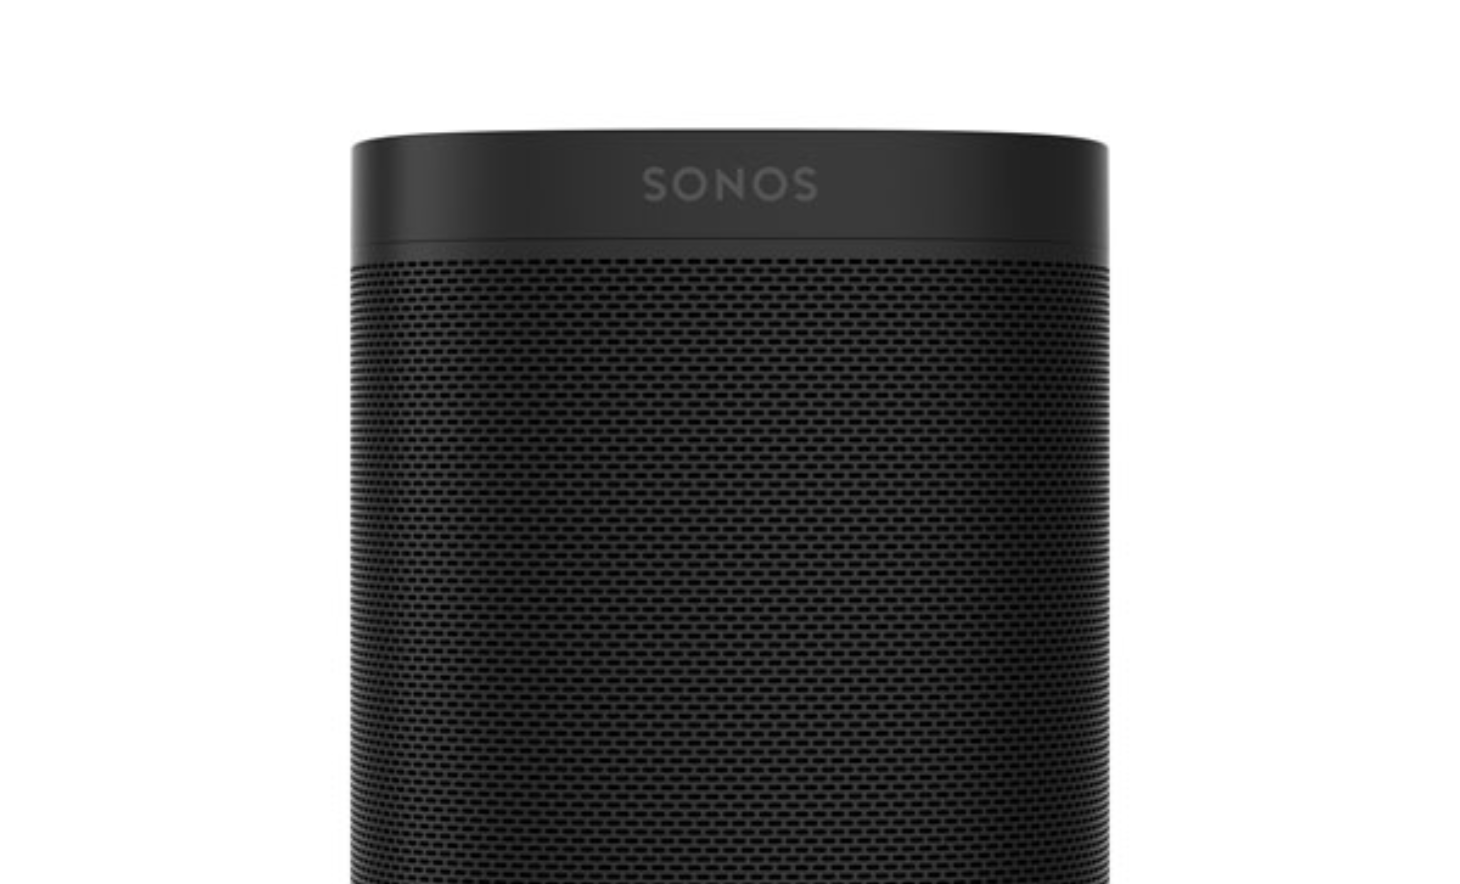 Sonos wins first round in smart speaker patent lawsuit against Google